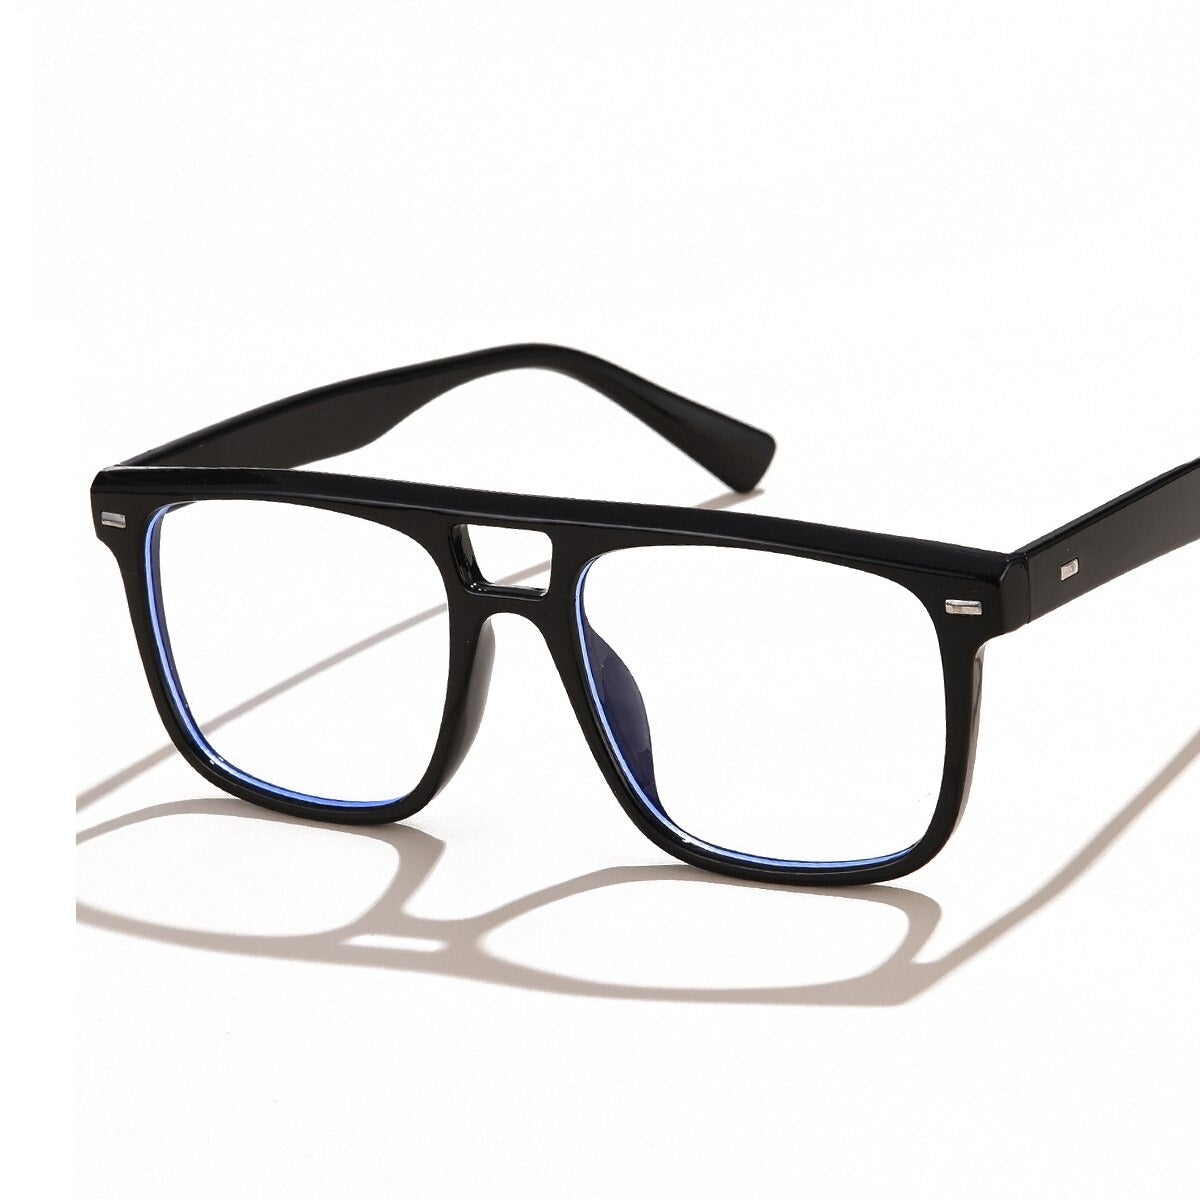 Fashion Square Anti Blue Rays Glasses For Unisex-Unique and Classy